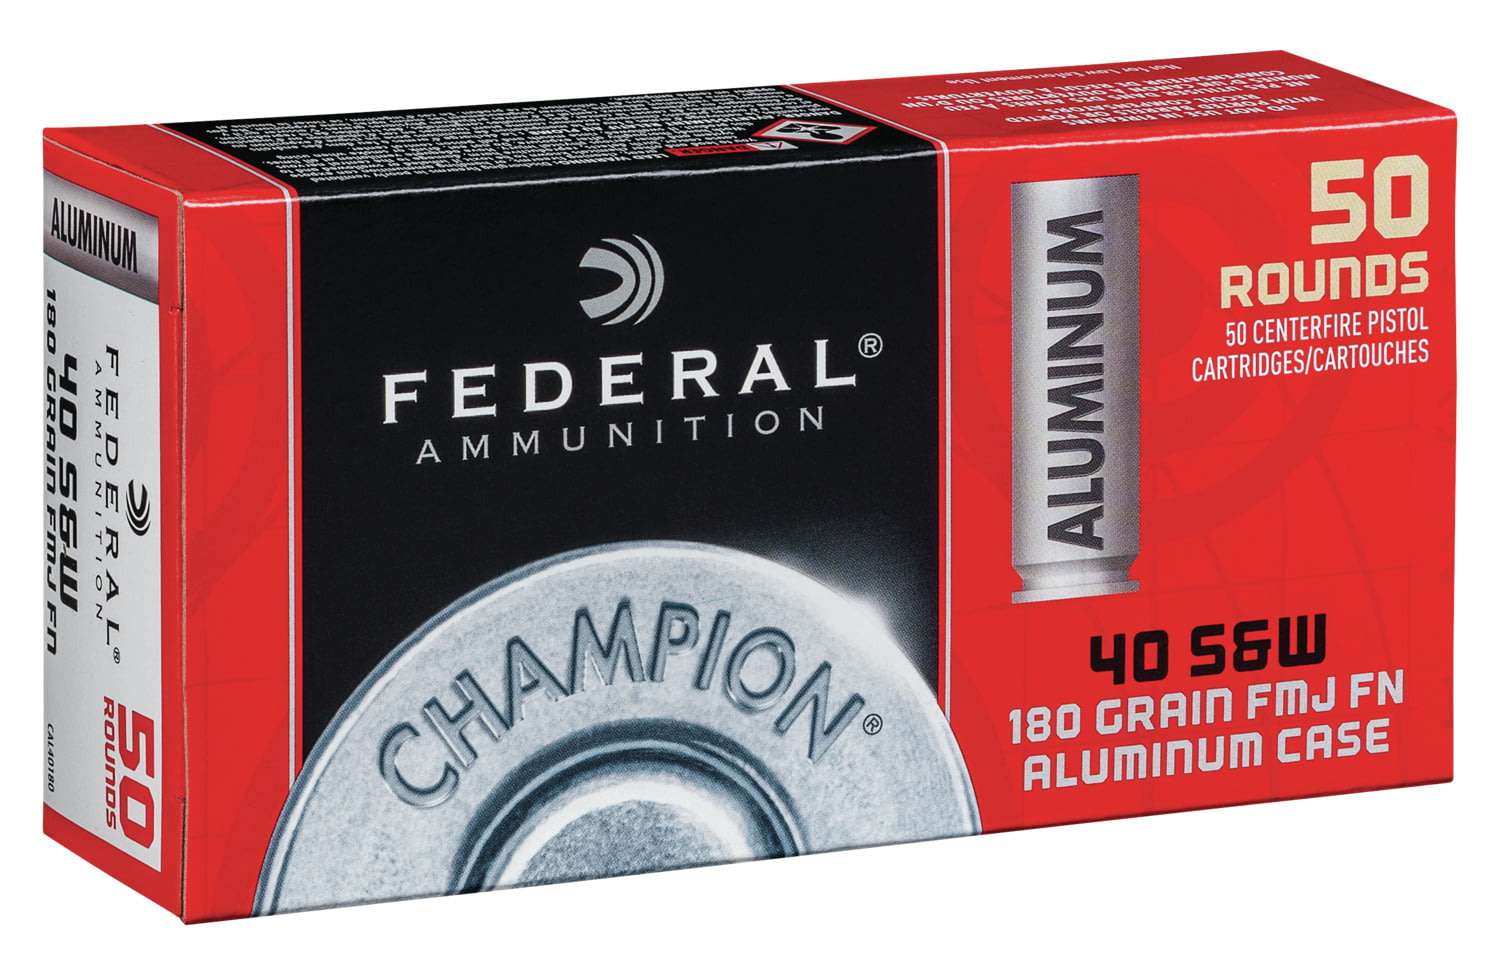 Federal Premium Centerfire Handgun Ammunition .40 S&W 180 grain Full Metal Jacket Centerfire Pistol Ammunition